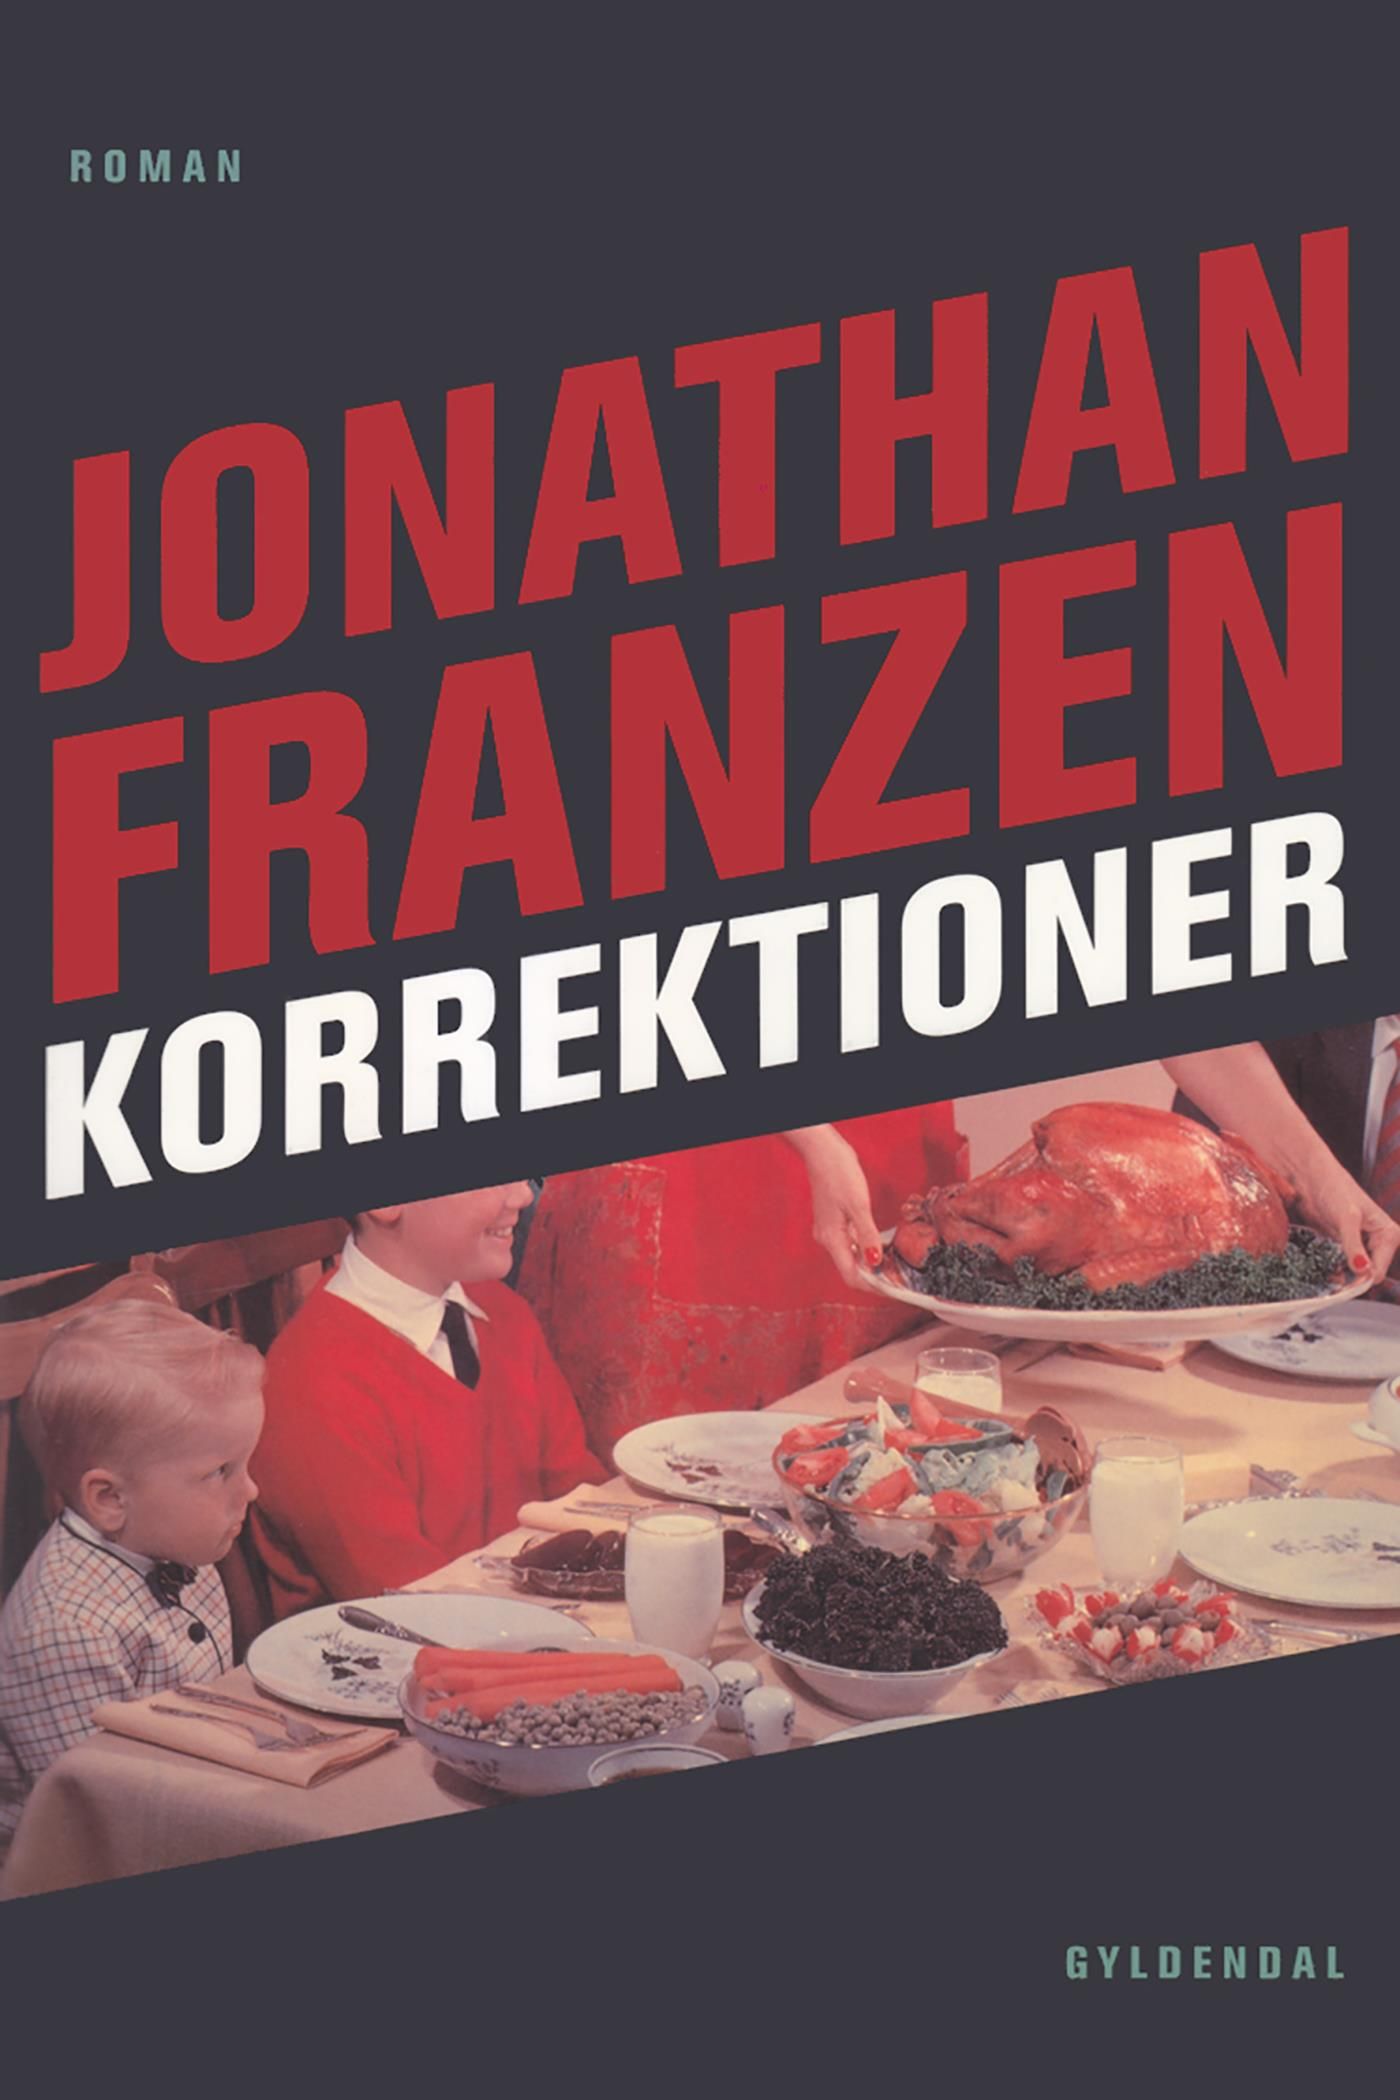 Korrektioner, eBook by Jonathan Franzen, Jonathan Franzen